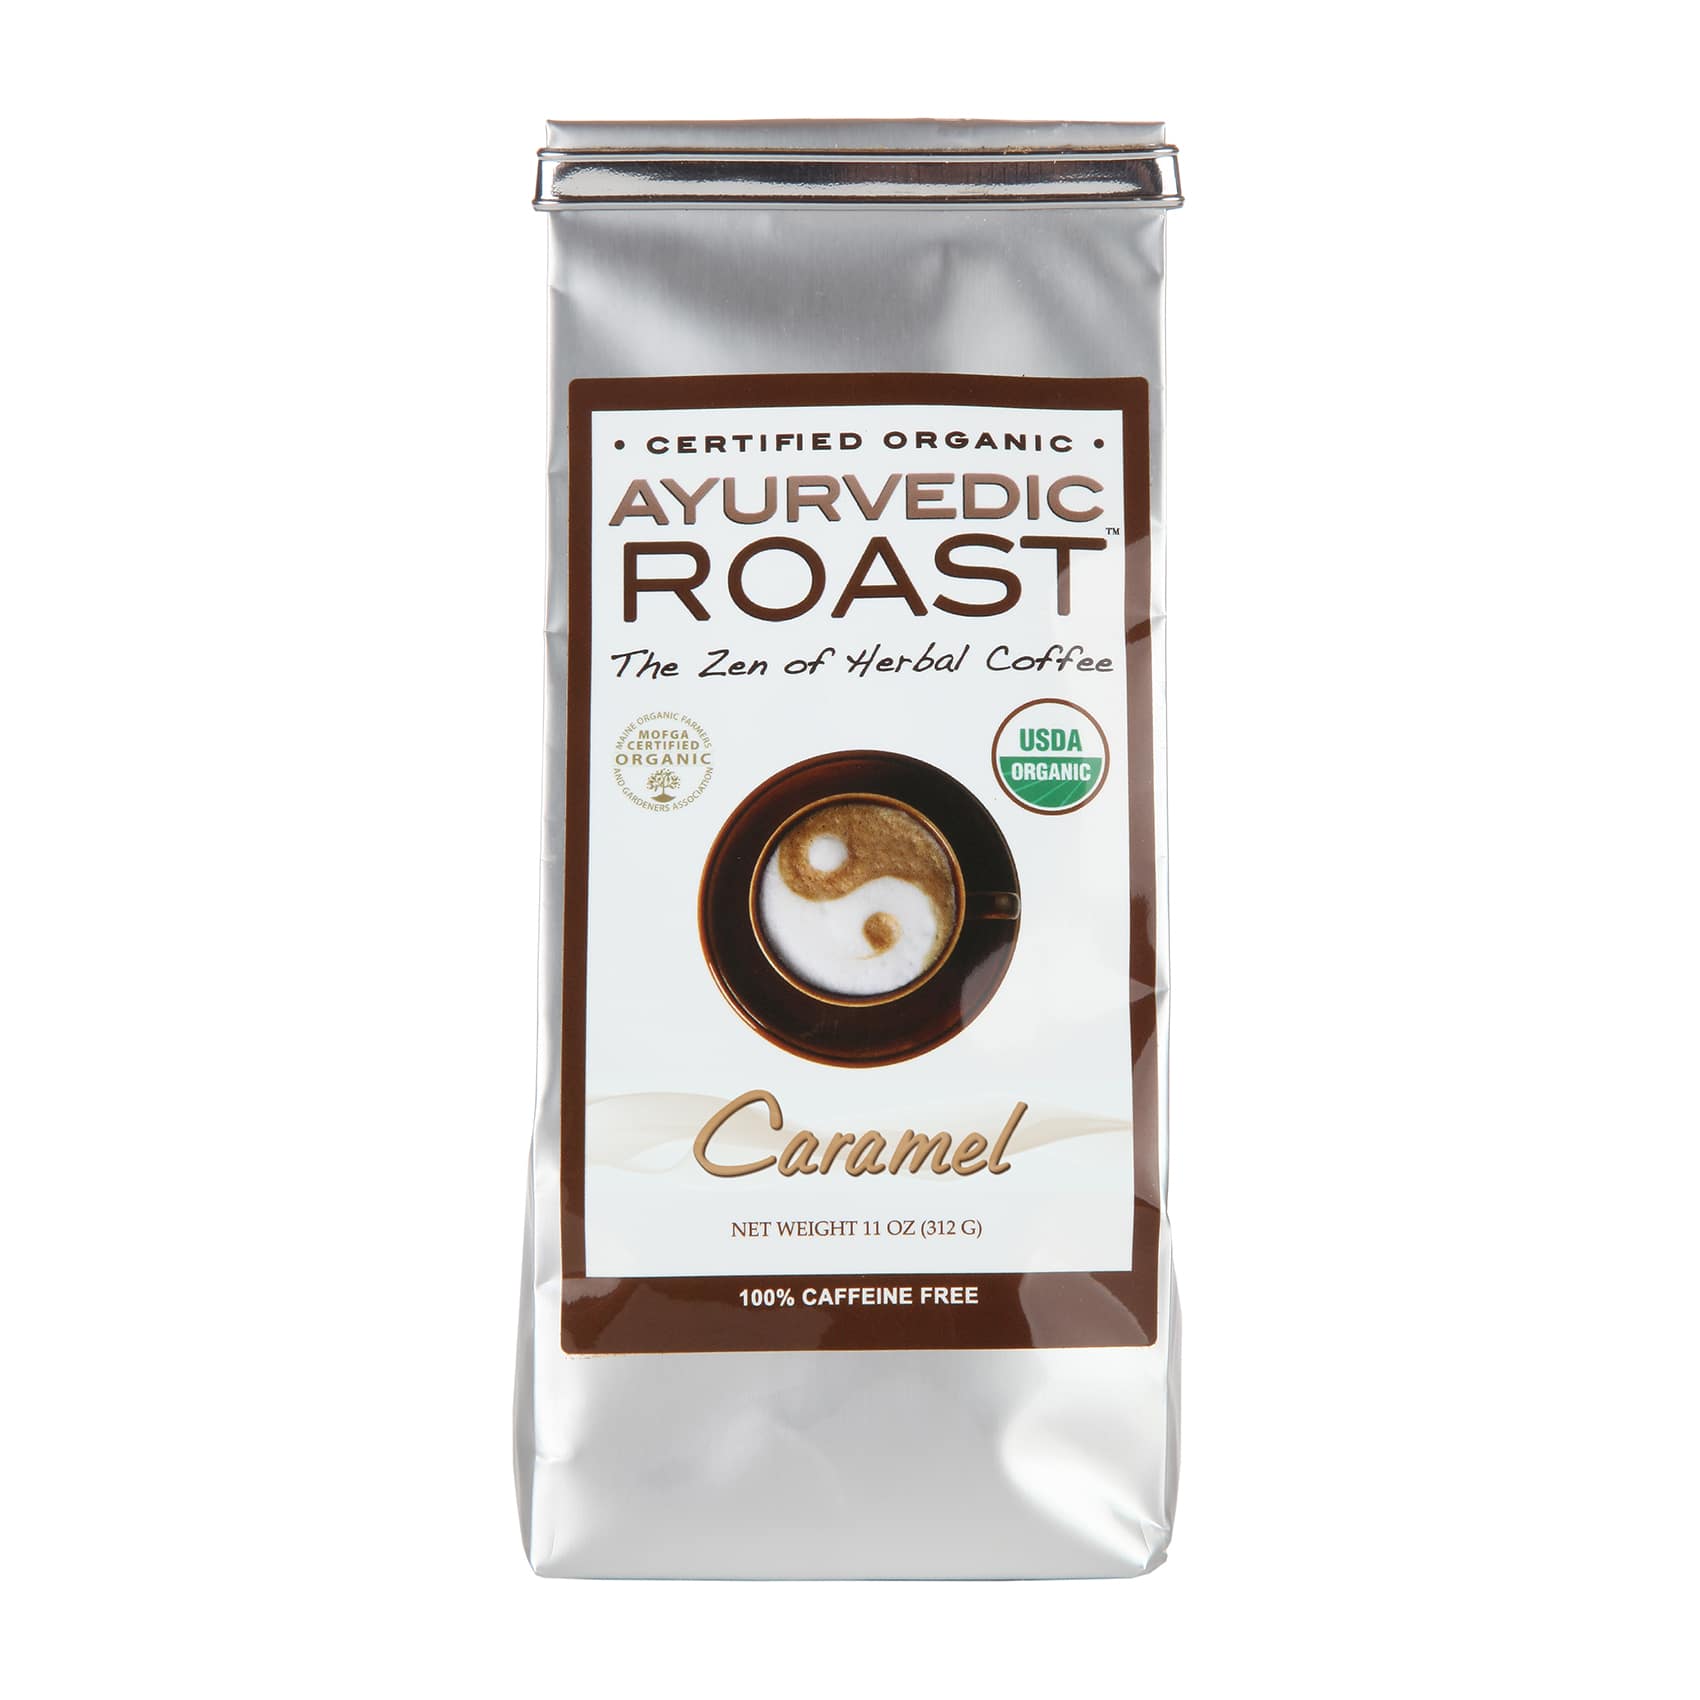 Ayurvedic Roast - Organic Coffee Substitute, Caffeine Free Grain Coffee with Barley Chicory Ashwagandha Brahmi - Caramel-0